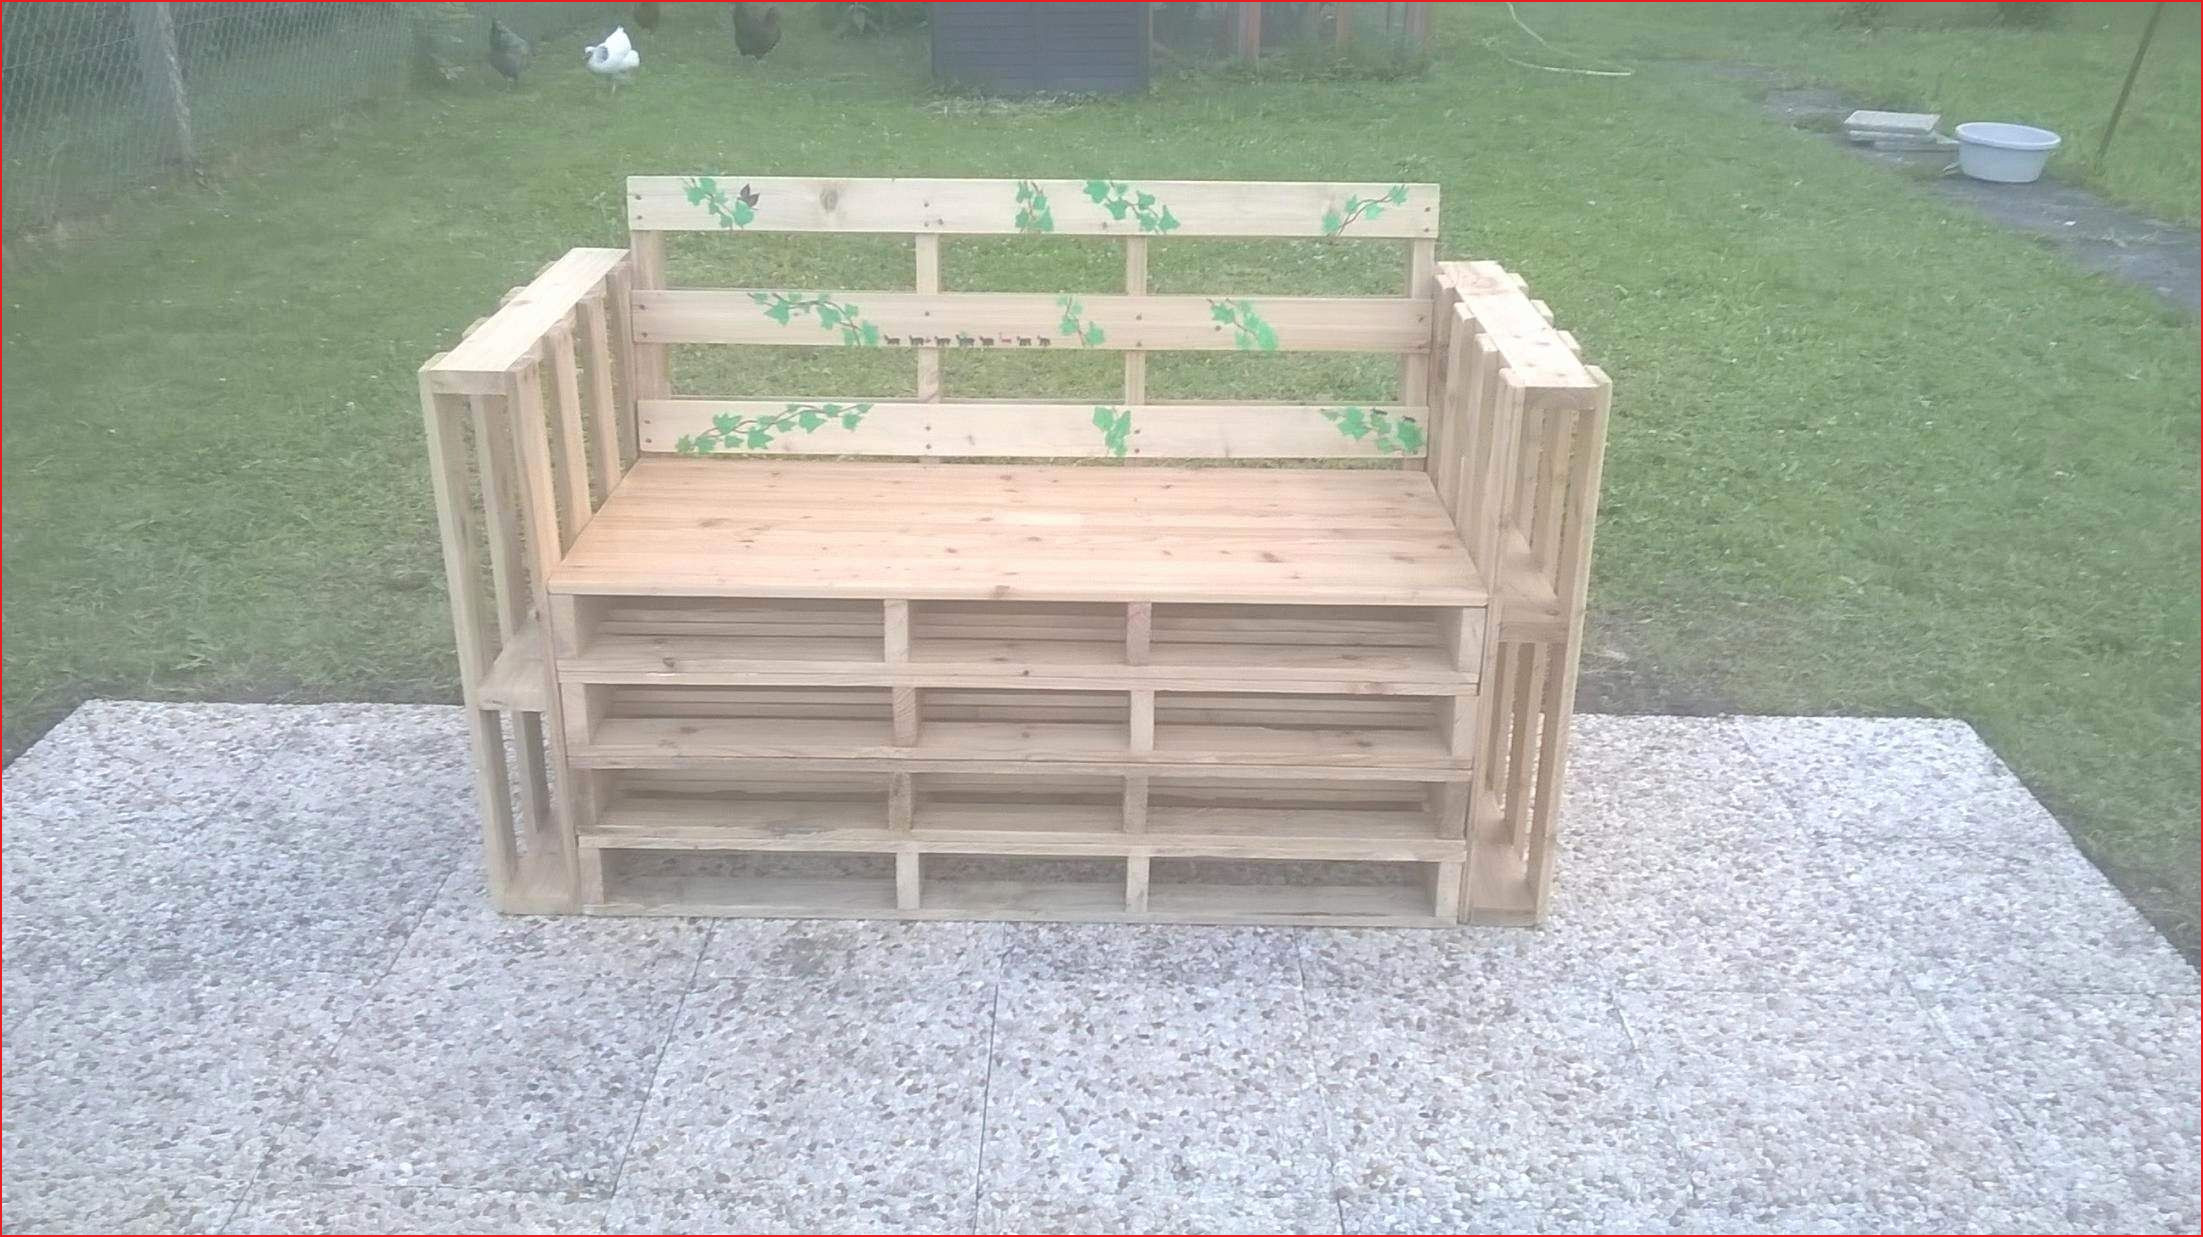 Table Roulante De Jardin Luxe Innovante Banc Pour Jardin Image De Jardin Décoratif